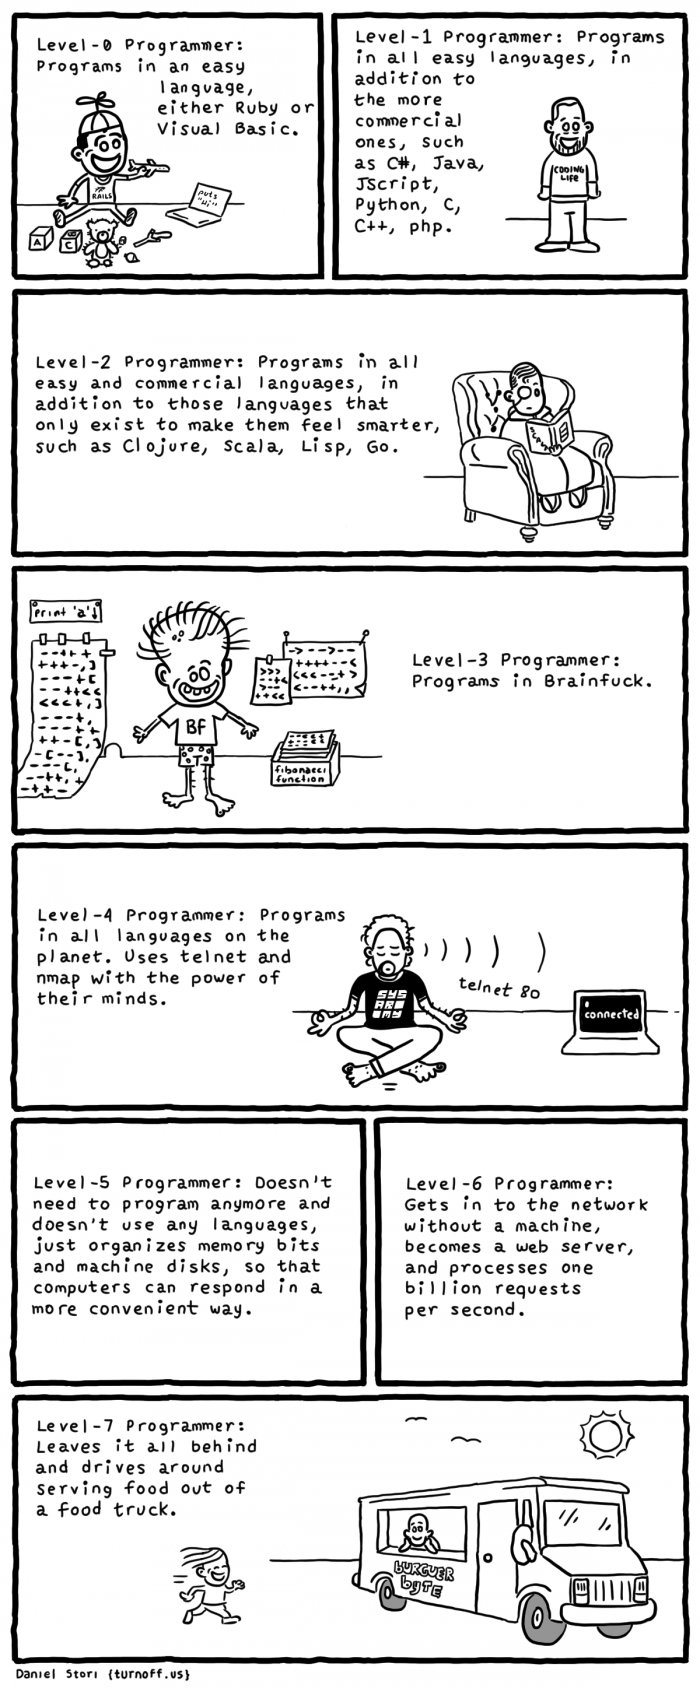 Programmer Levels